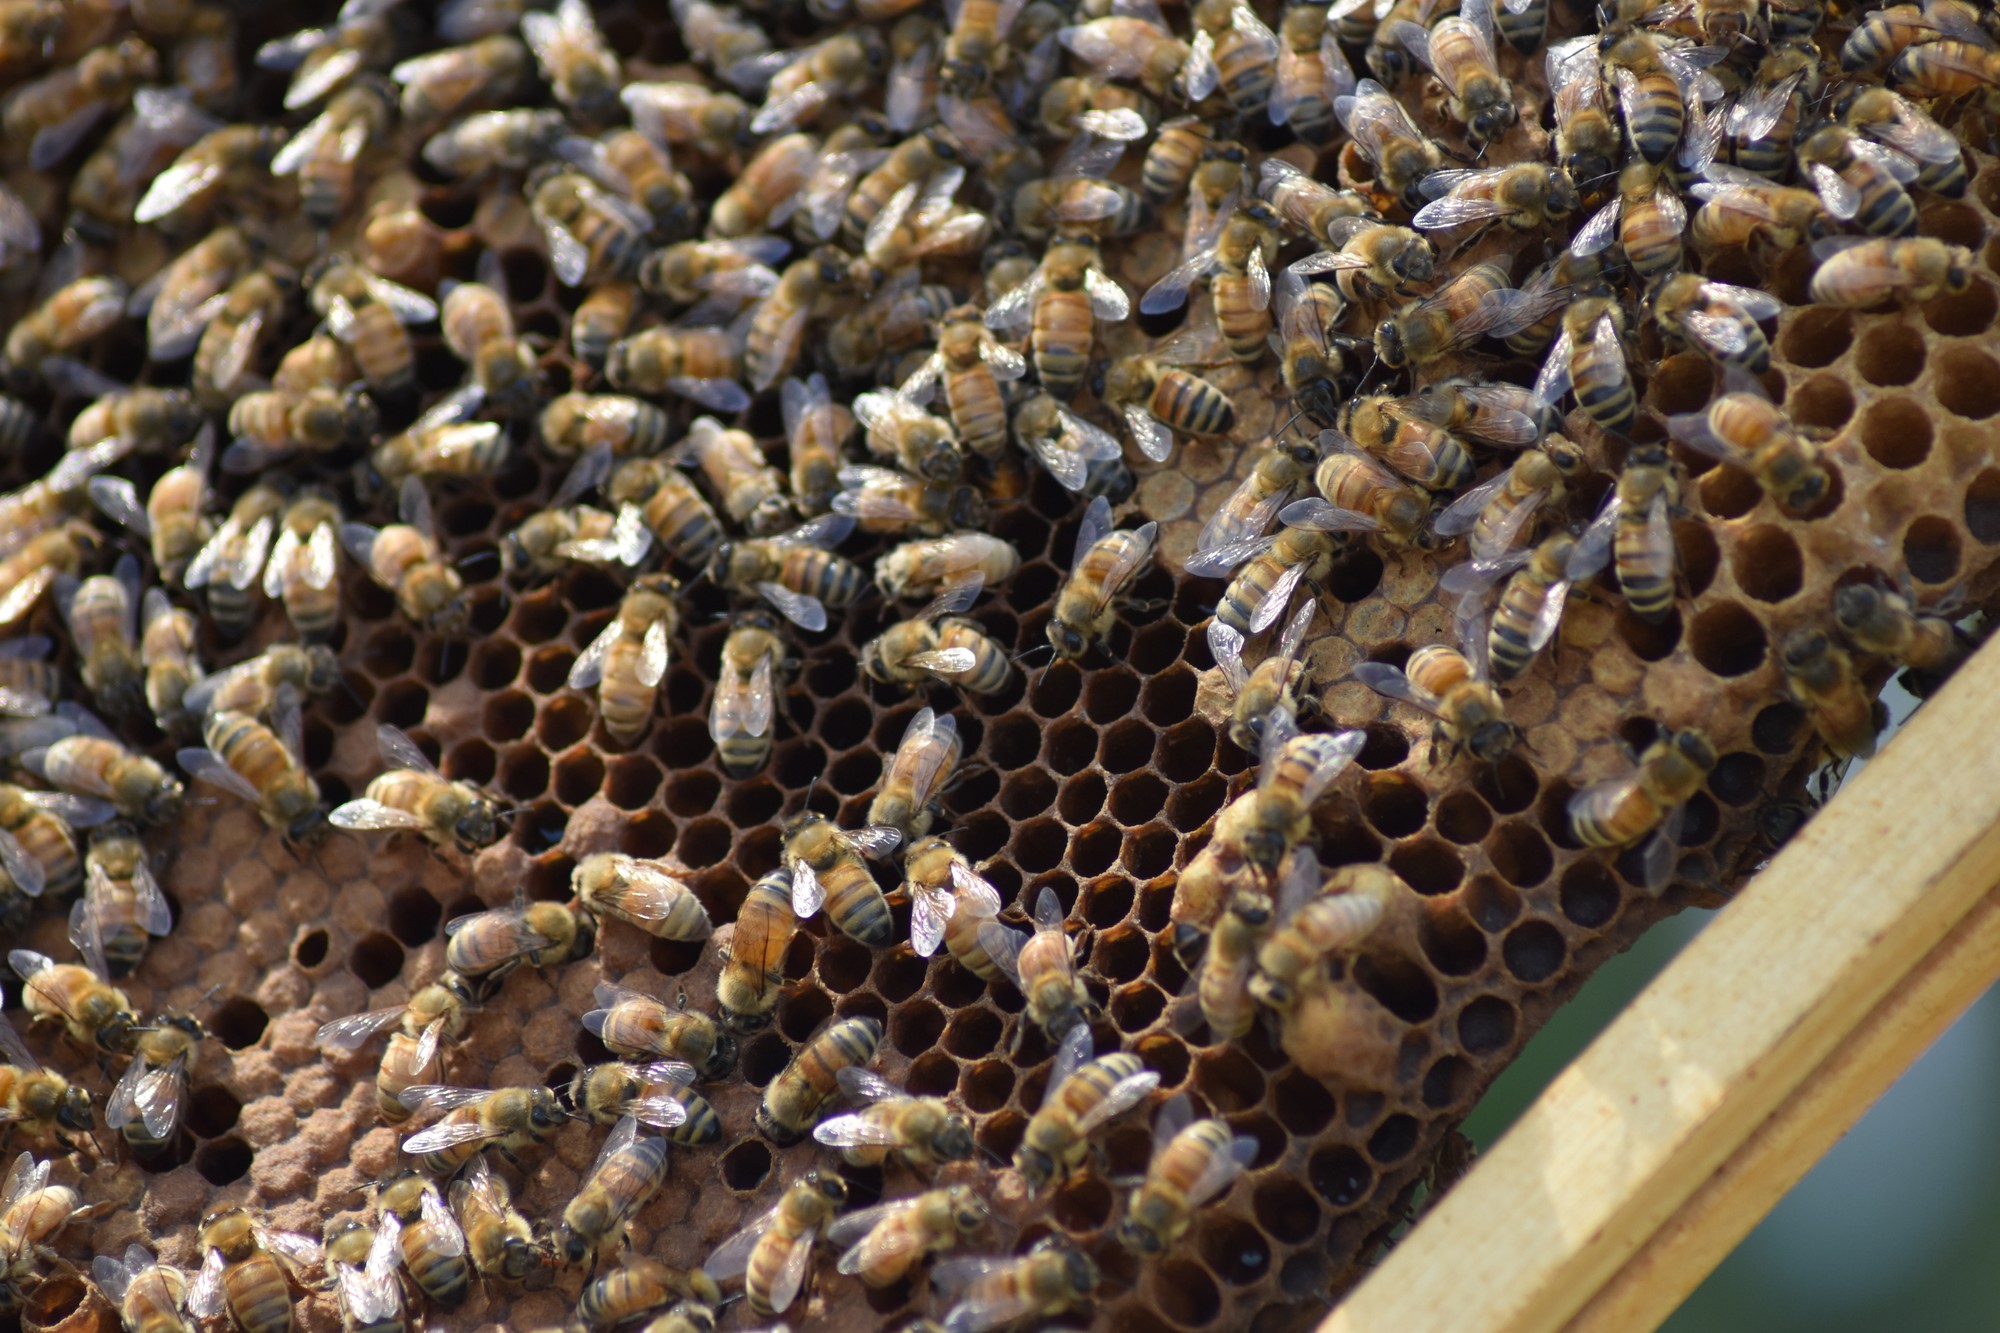 KSU farms to help revive bee population